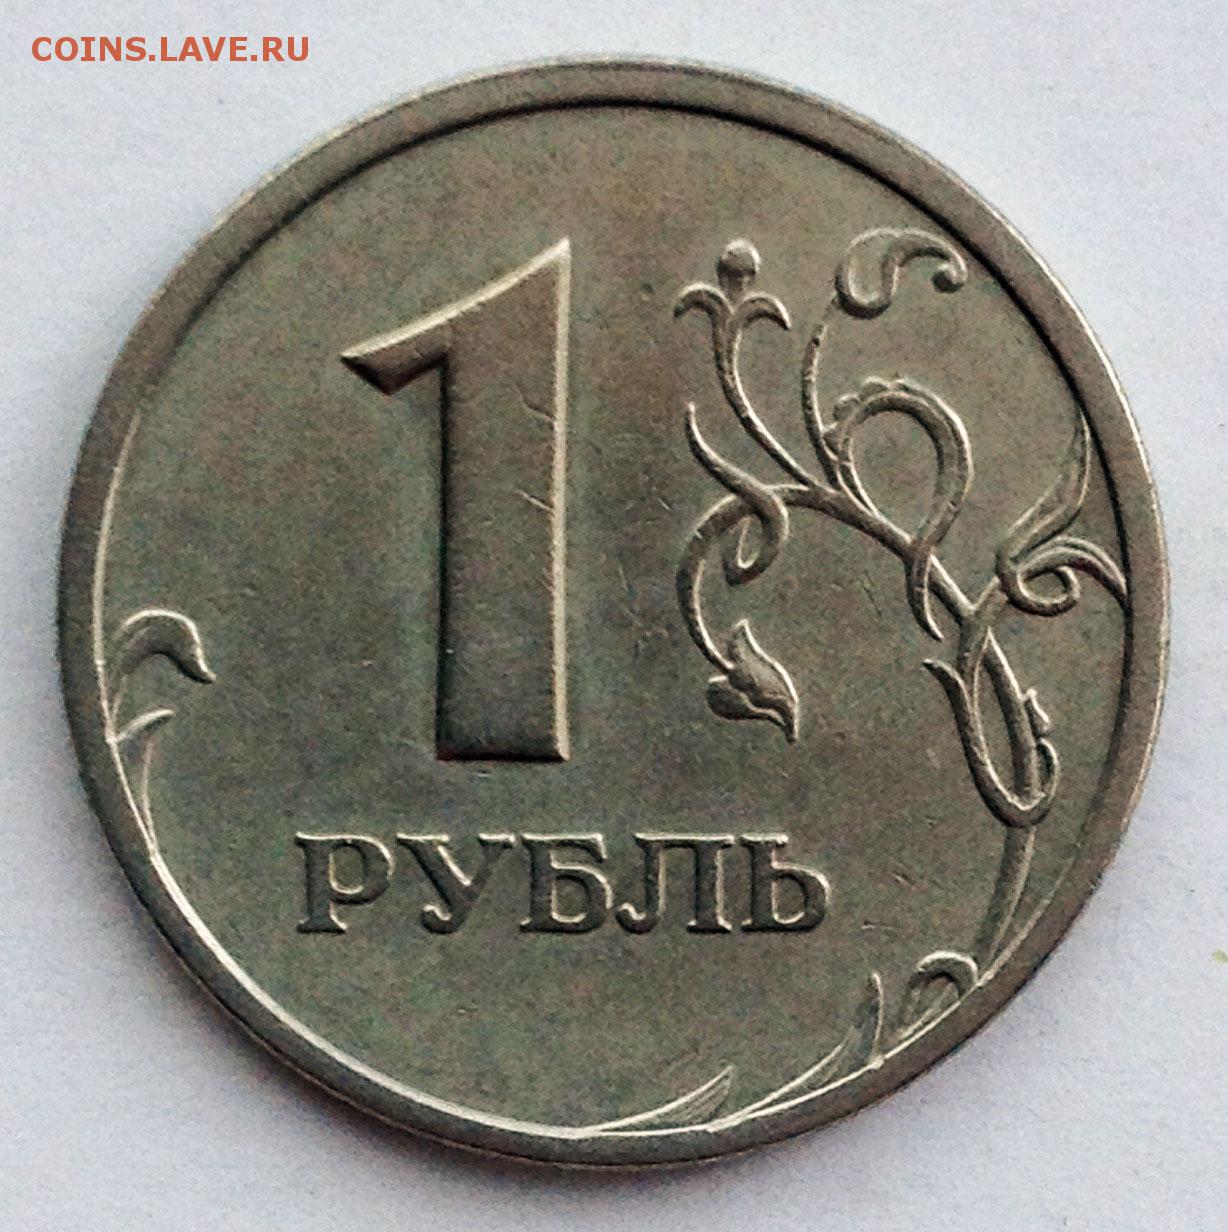 Рублю 2003 года